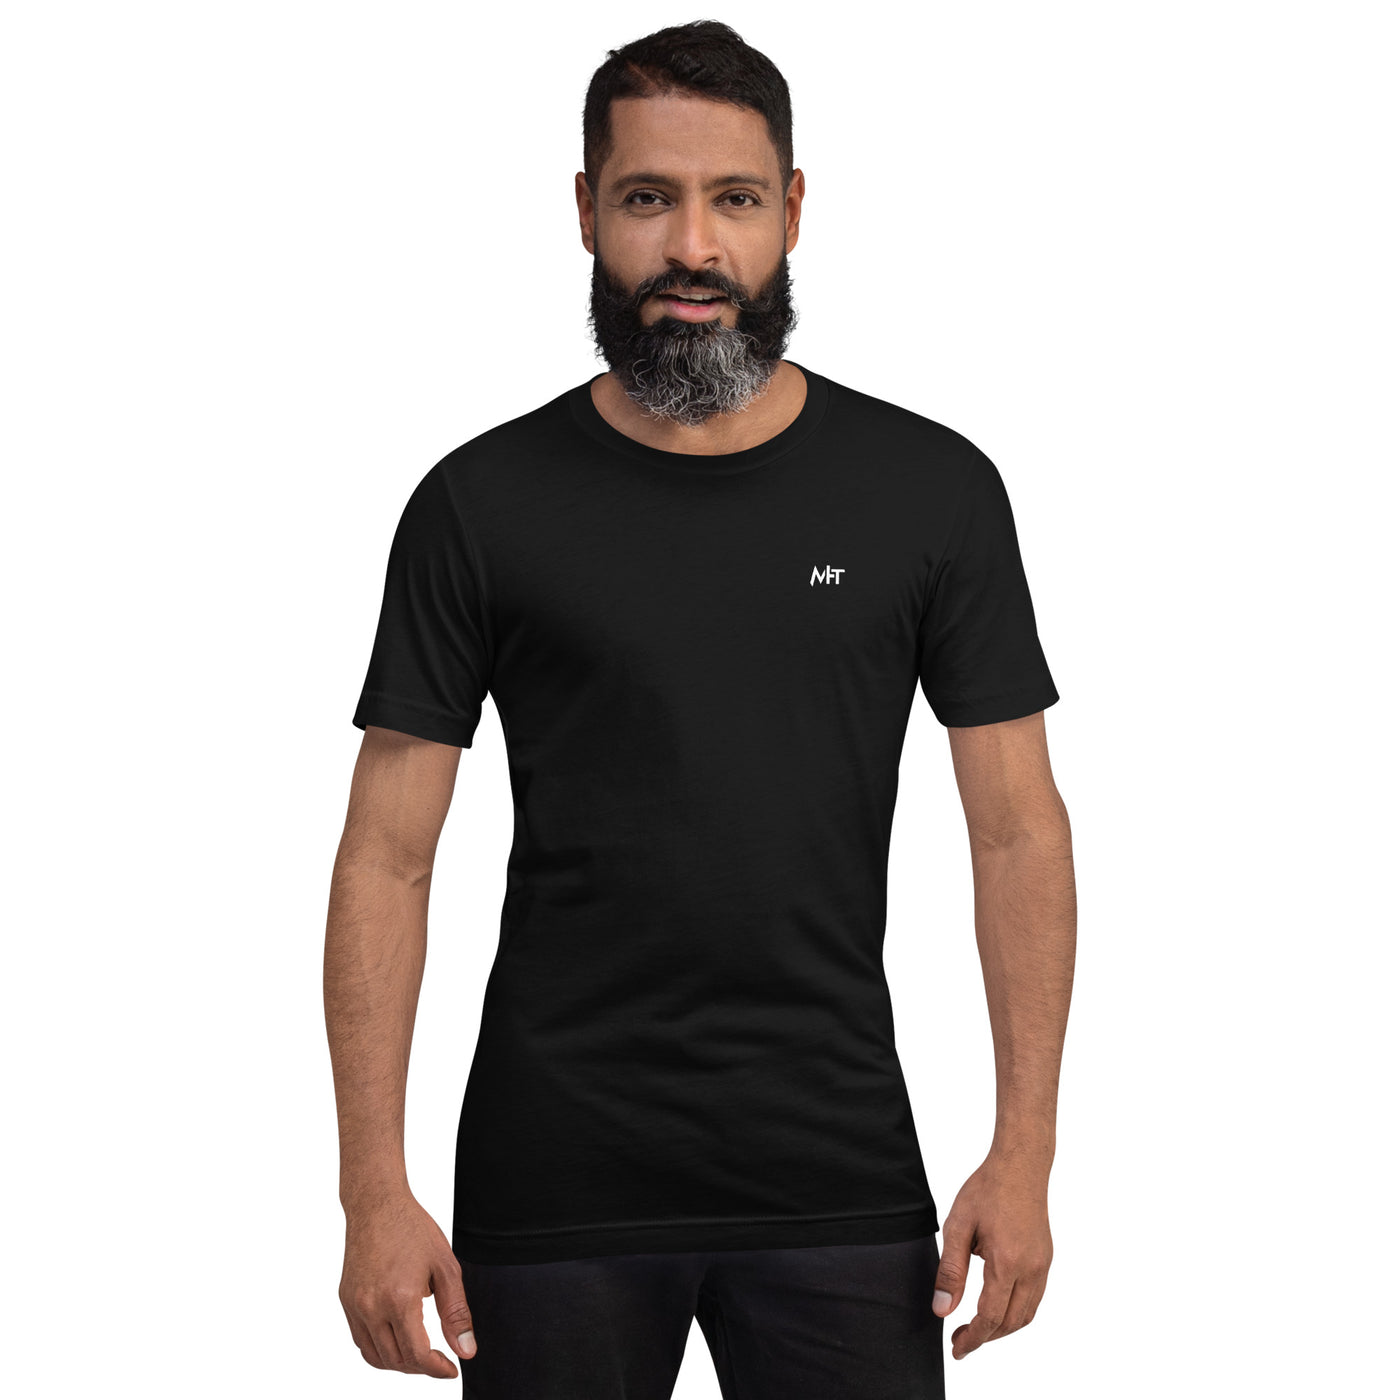 Talk is Cheap, Show me the Code Unisex t-shirt  ( Back Print )